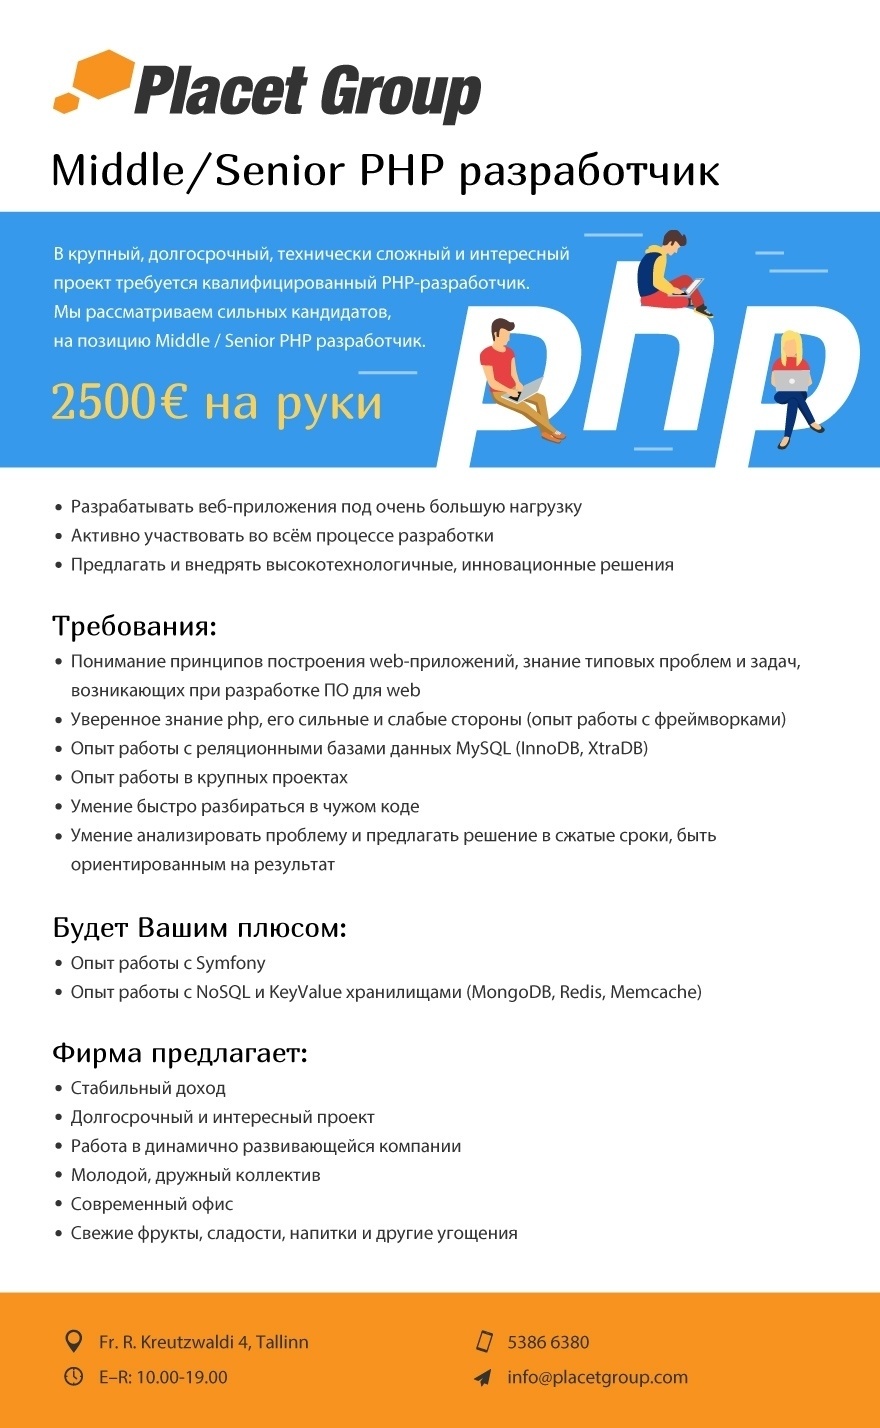 Placet Group OÜ Middle / Senior PHP - разработчик